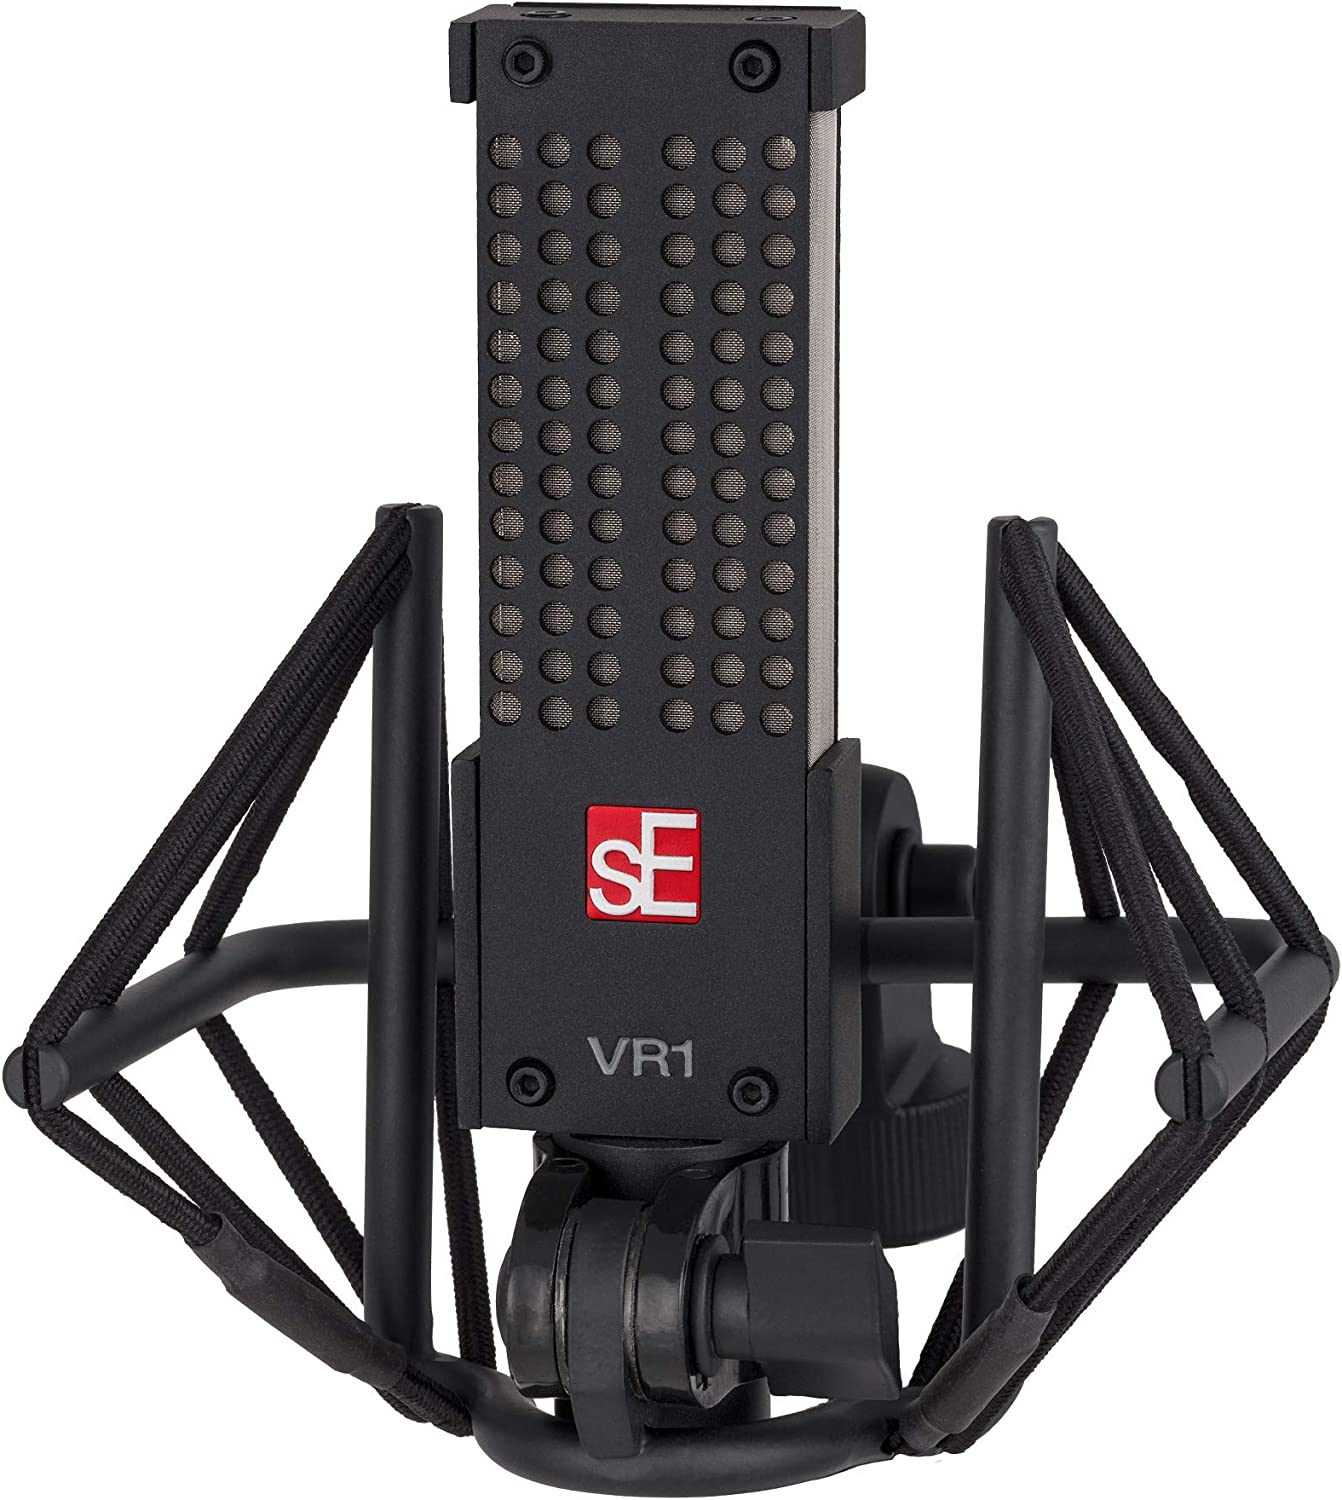 sE Electronics Voodoo VR1 Passive Ribbon Microphone